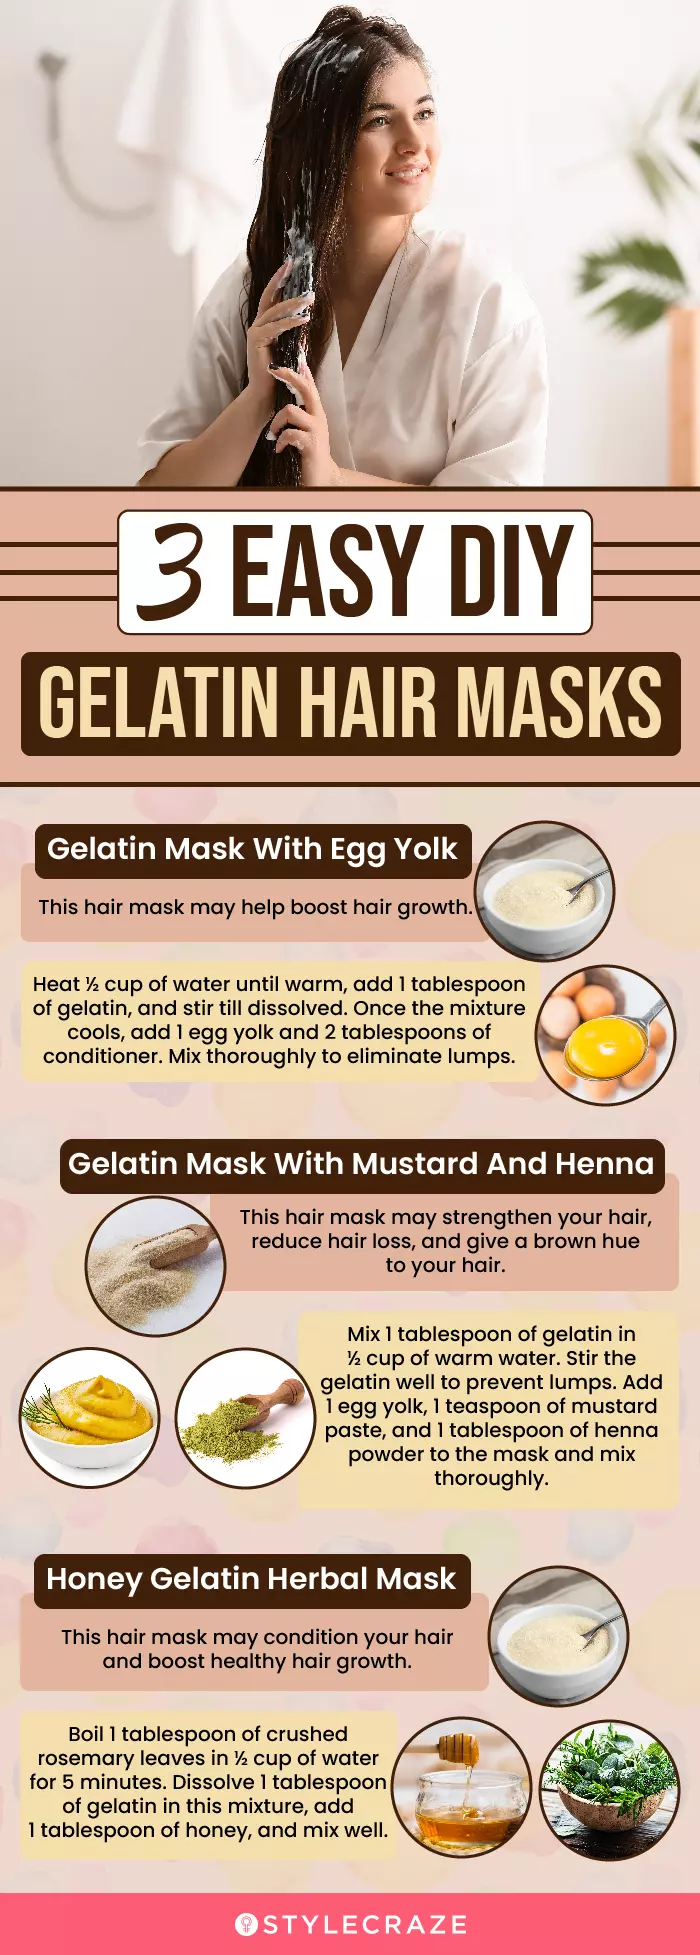 3 easy diy gelatin hair masks (infographic)